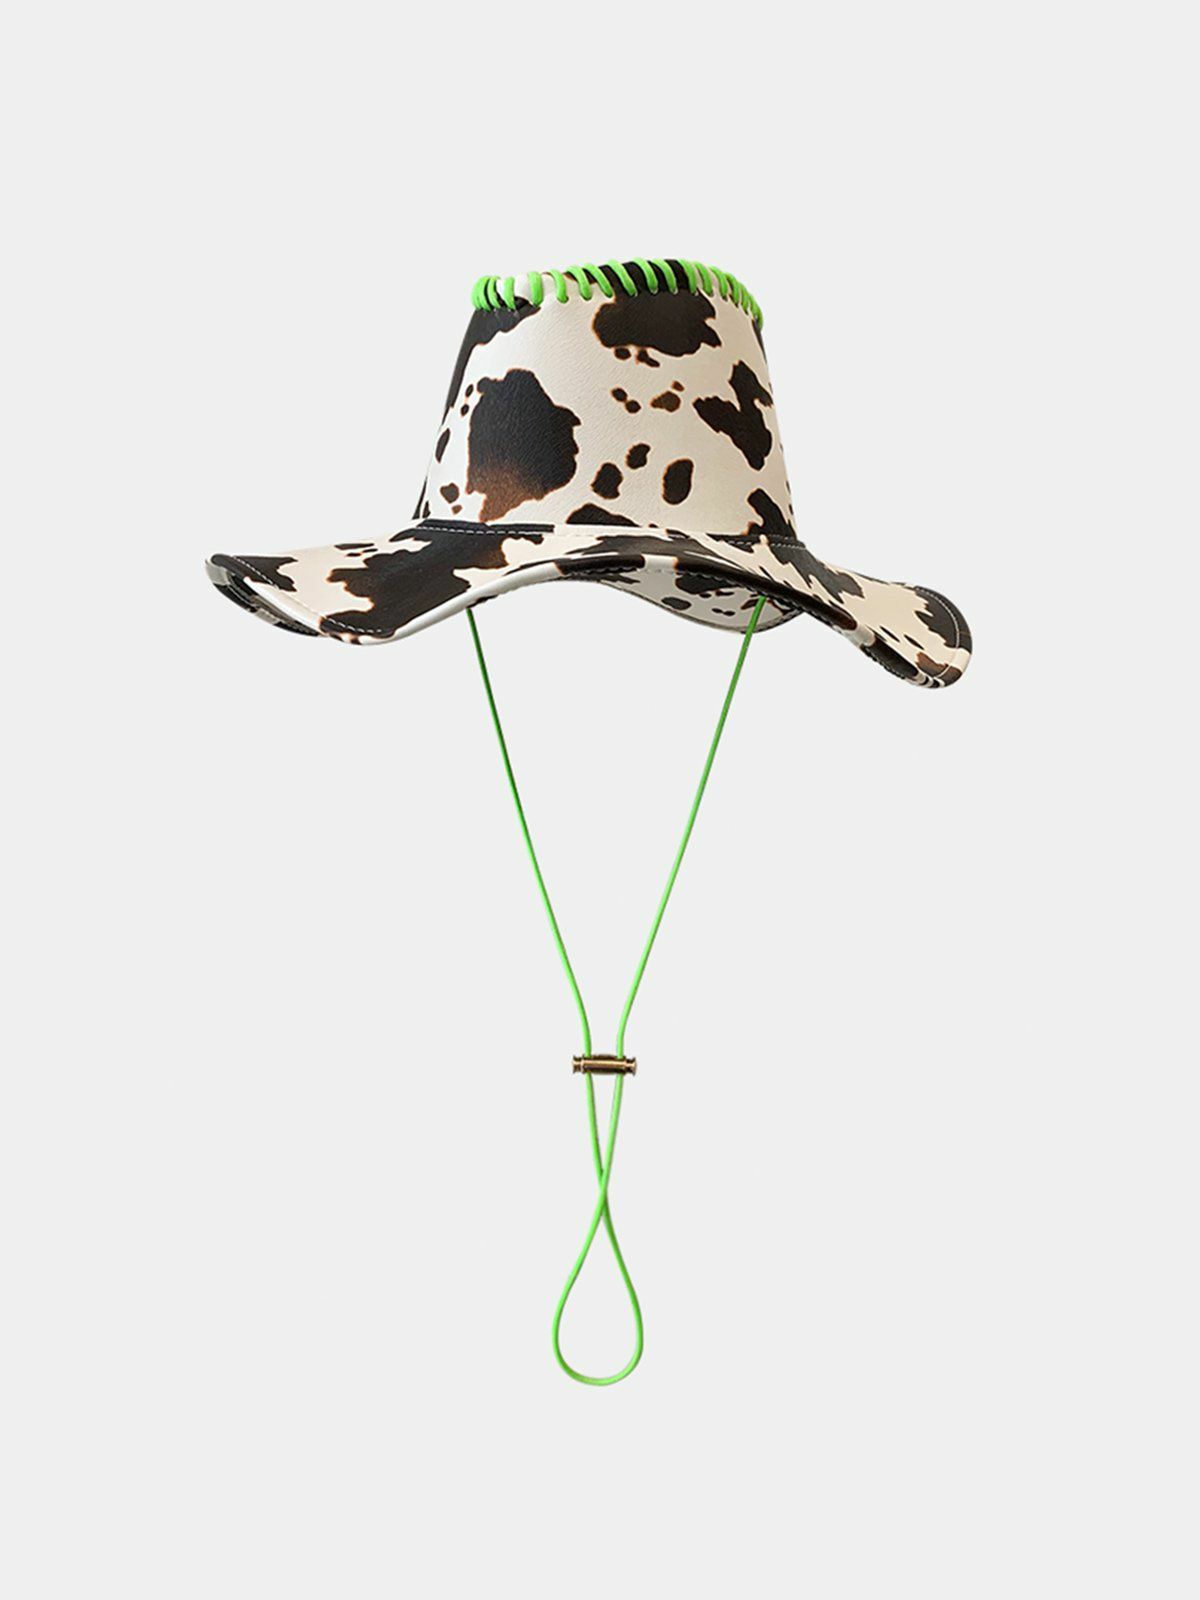 edgy cow print drawstring hat retro leather cap for urban streetwear 4064